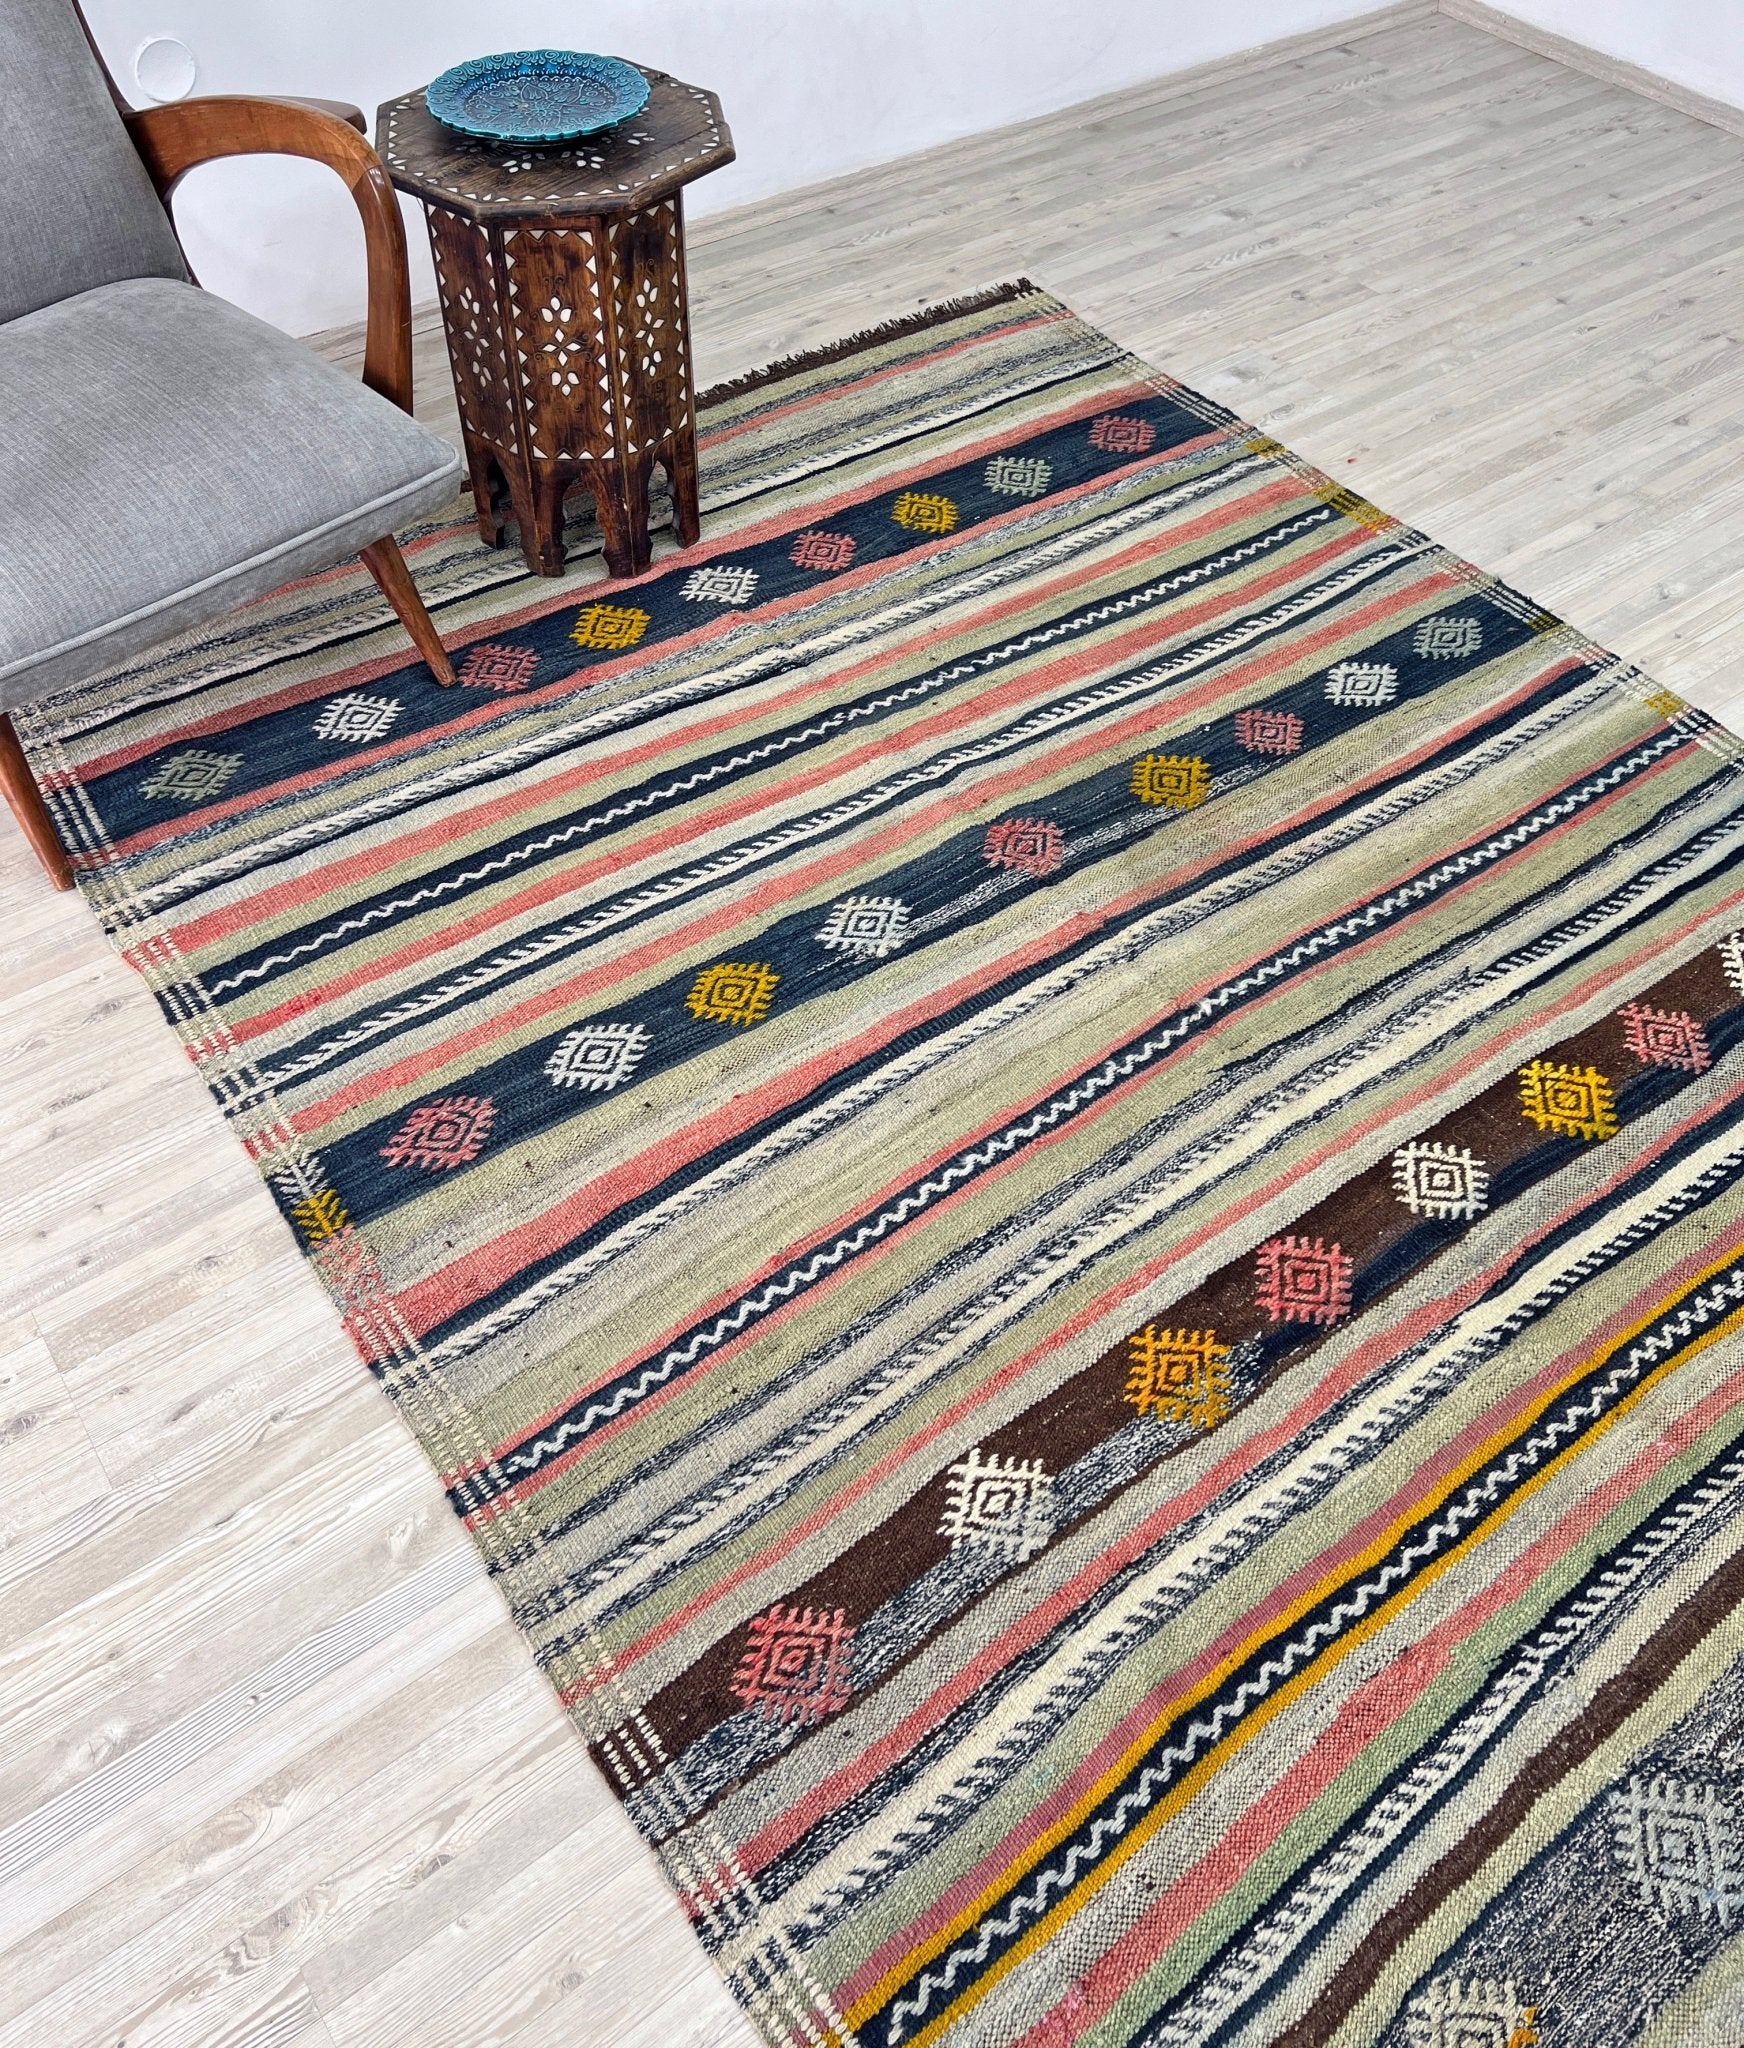 malatya handmade wool vintage turkish kilim rug shop san francisco bay area palo alto. Oriental rugs san berkeley buy rug